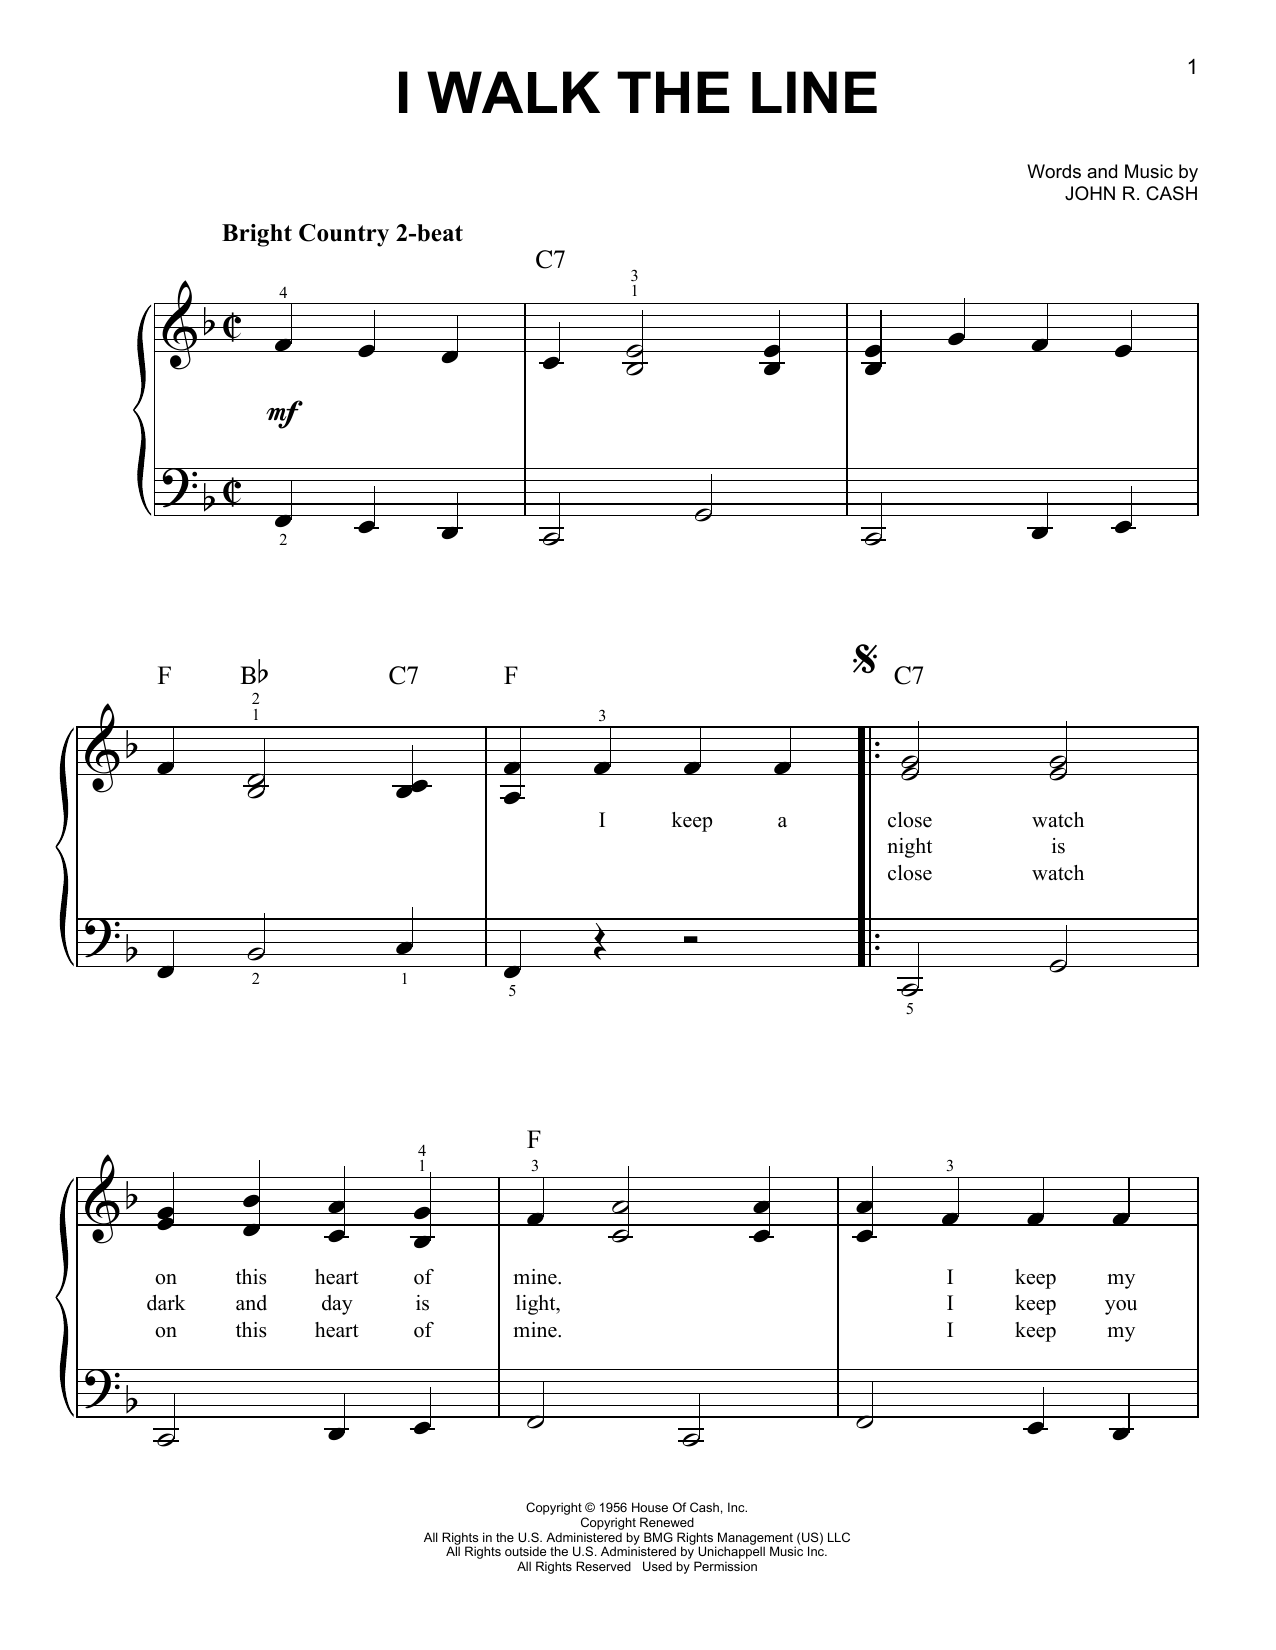 Johnny Cash I Walk The Line Sheet Music Notes & Chords for Banjo Tab - Download or Print PDF